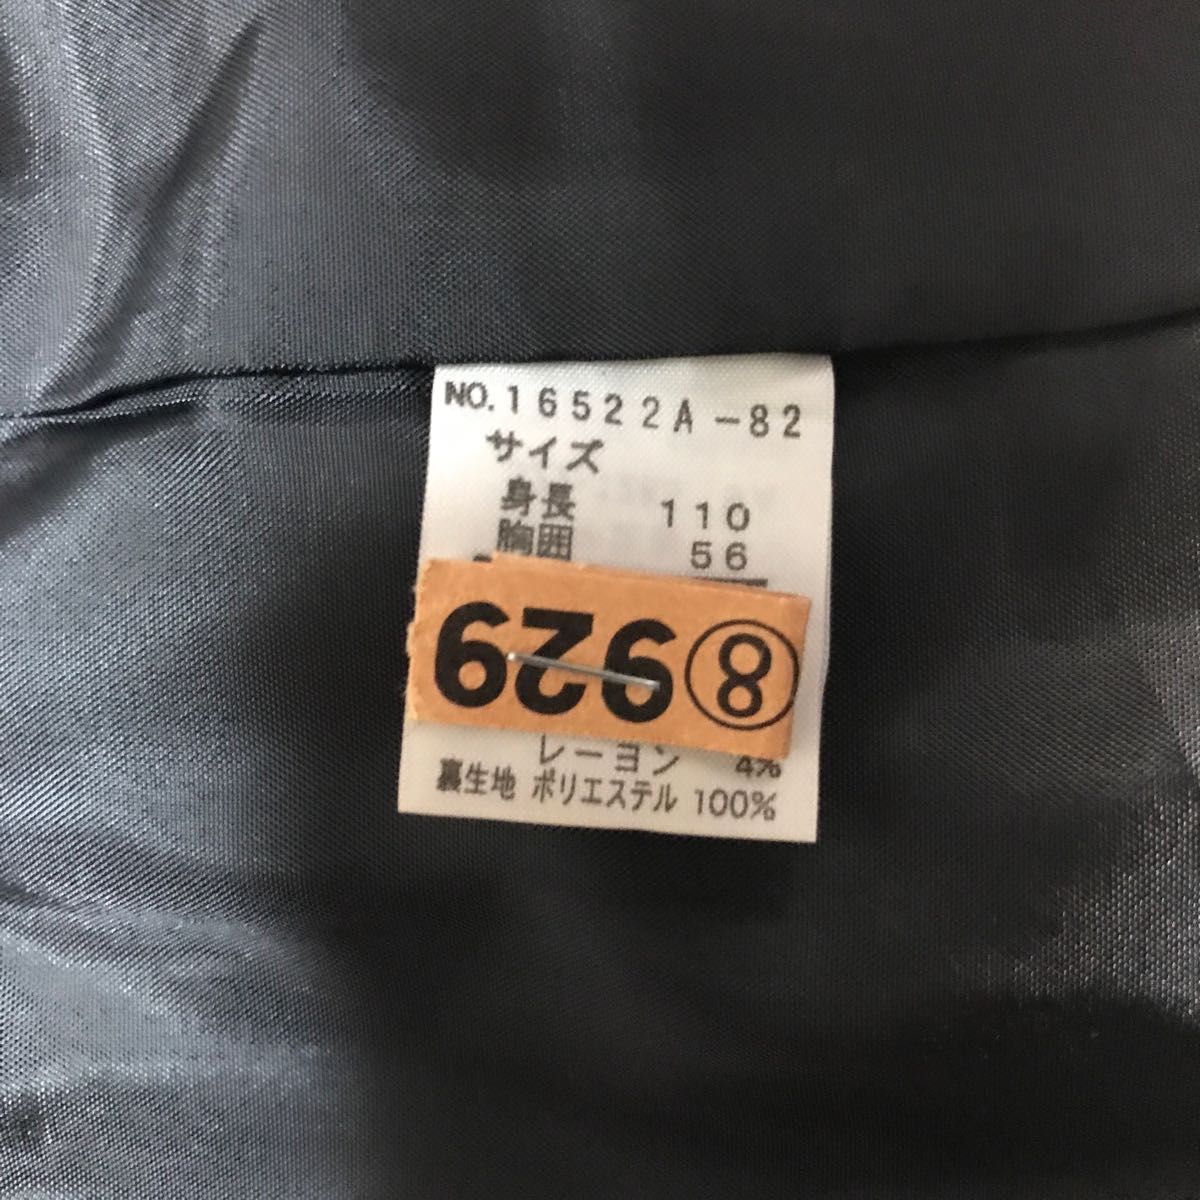 hiromichi nakano  ジャケット　長袖シャツ　ネクタイ　110cm